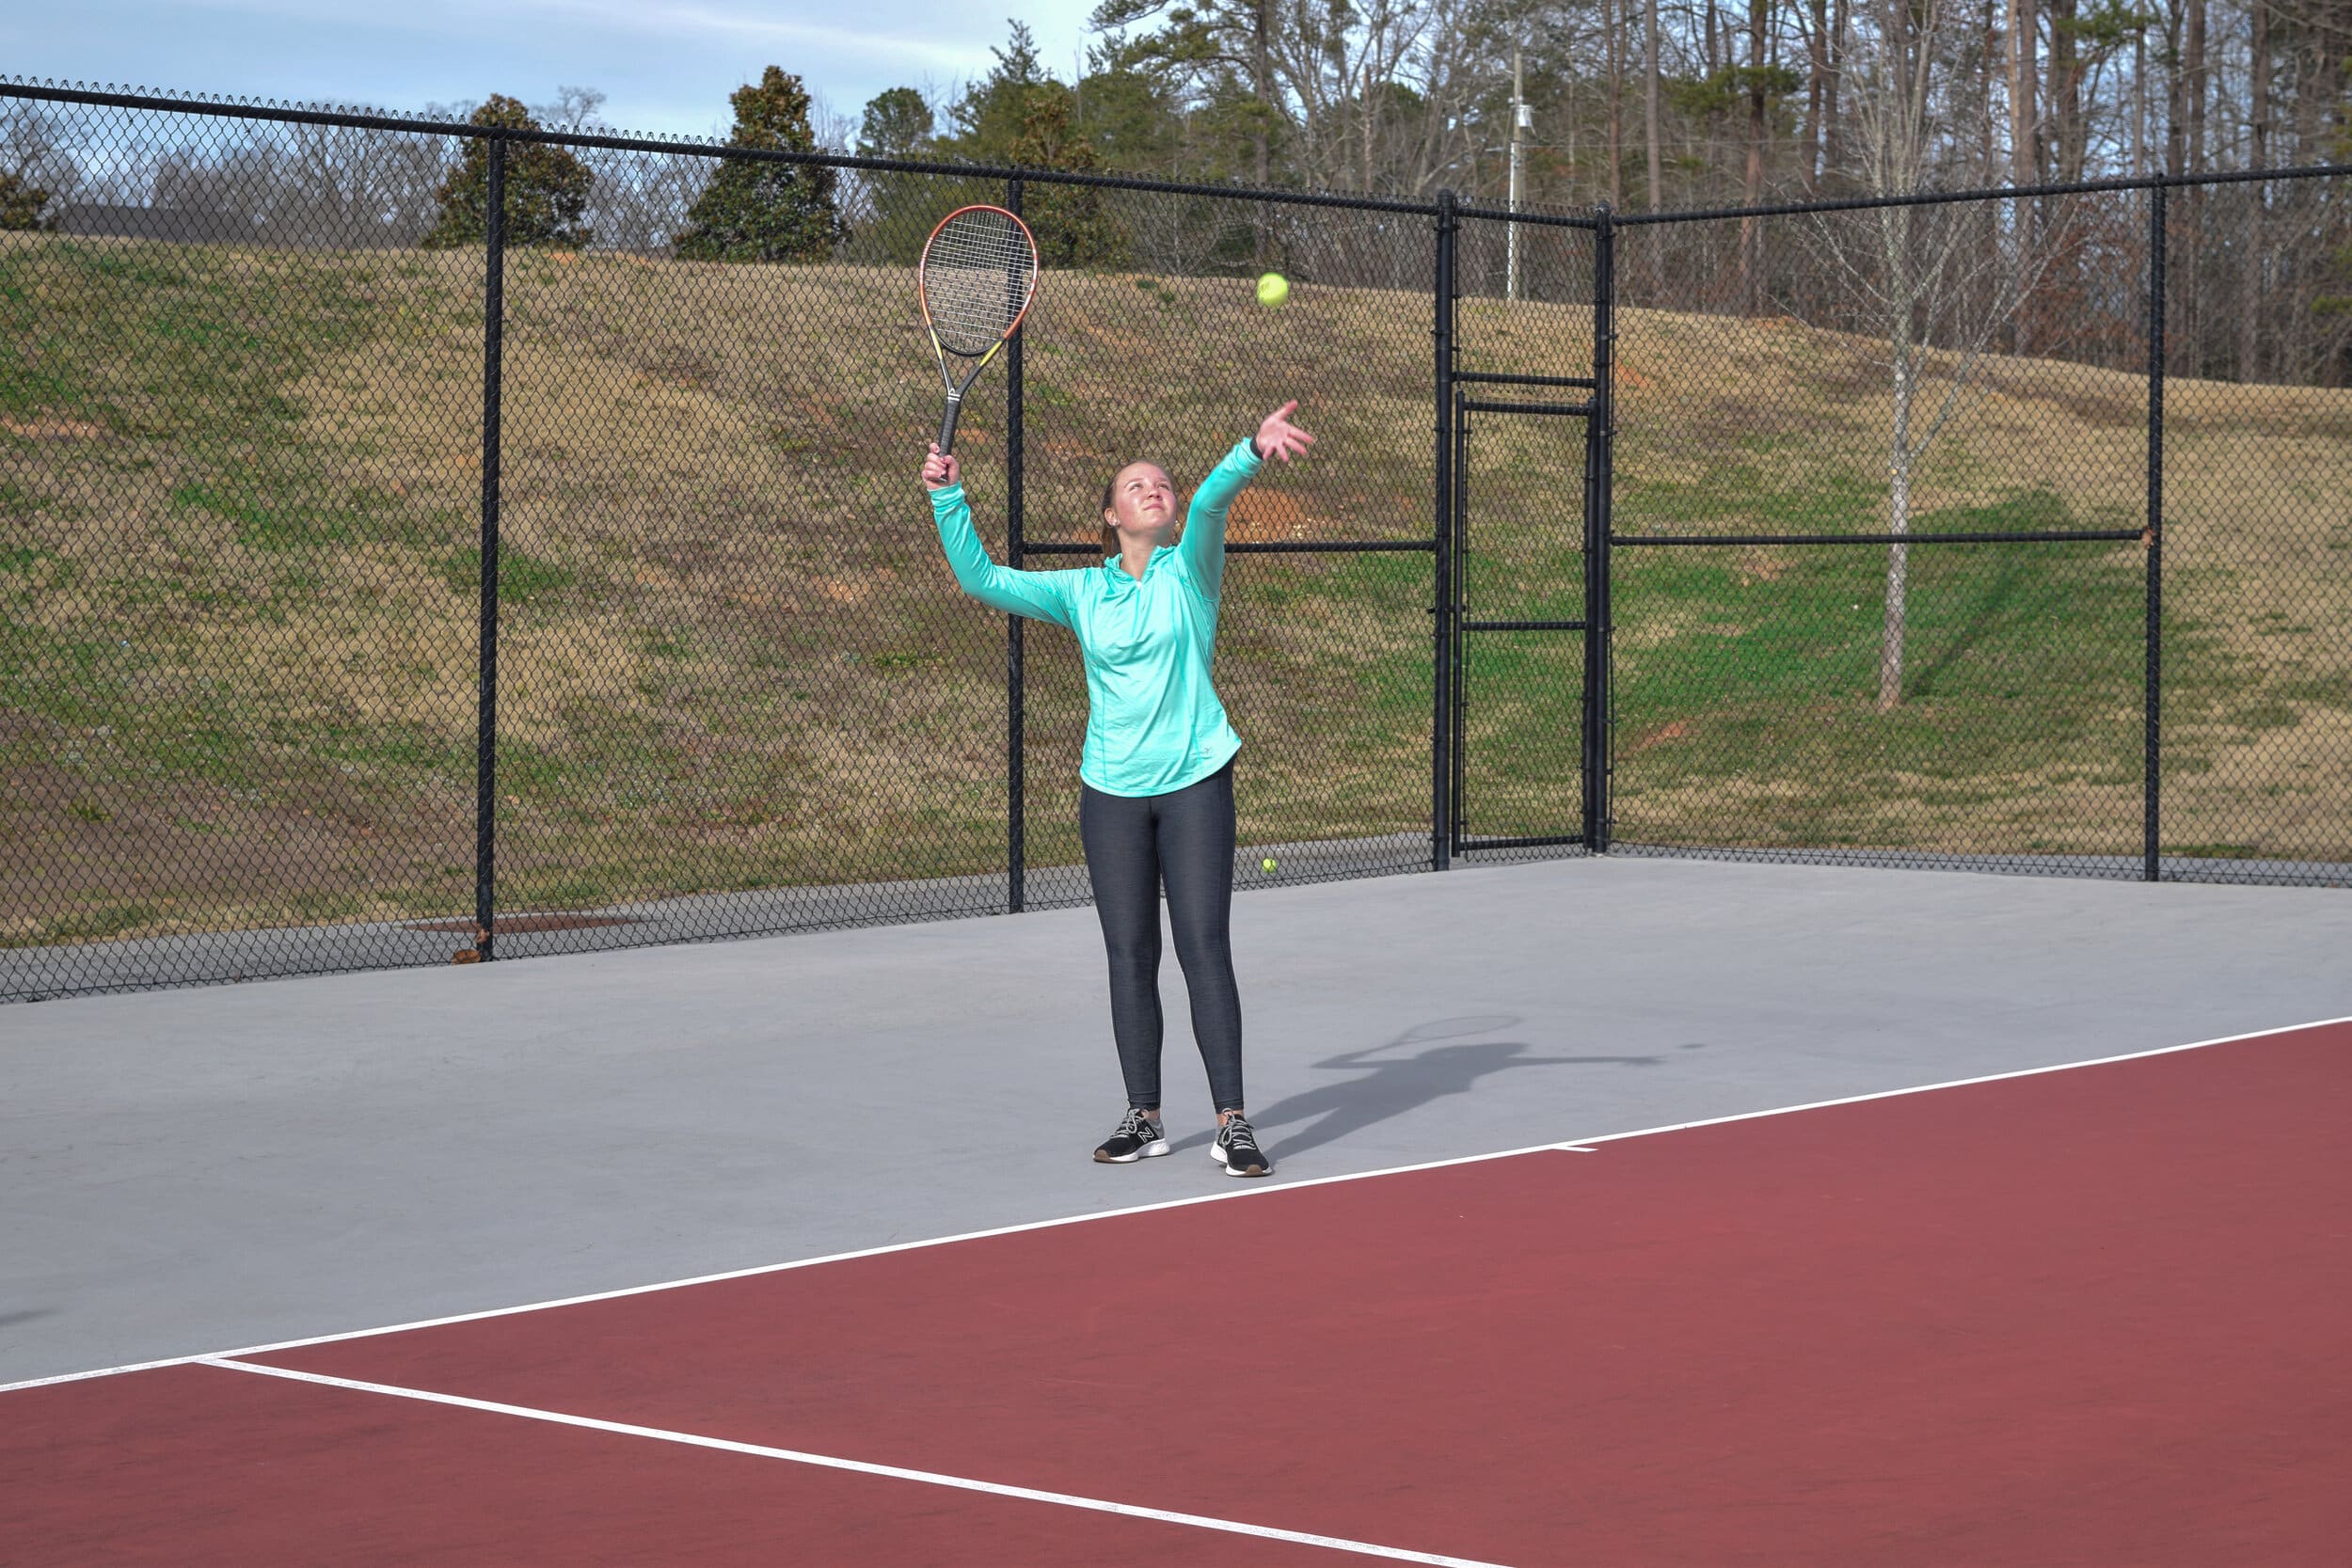 Morgan takes a swing at tennis practice.